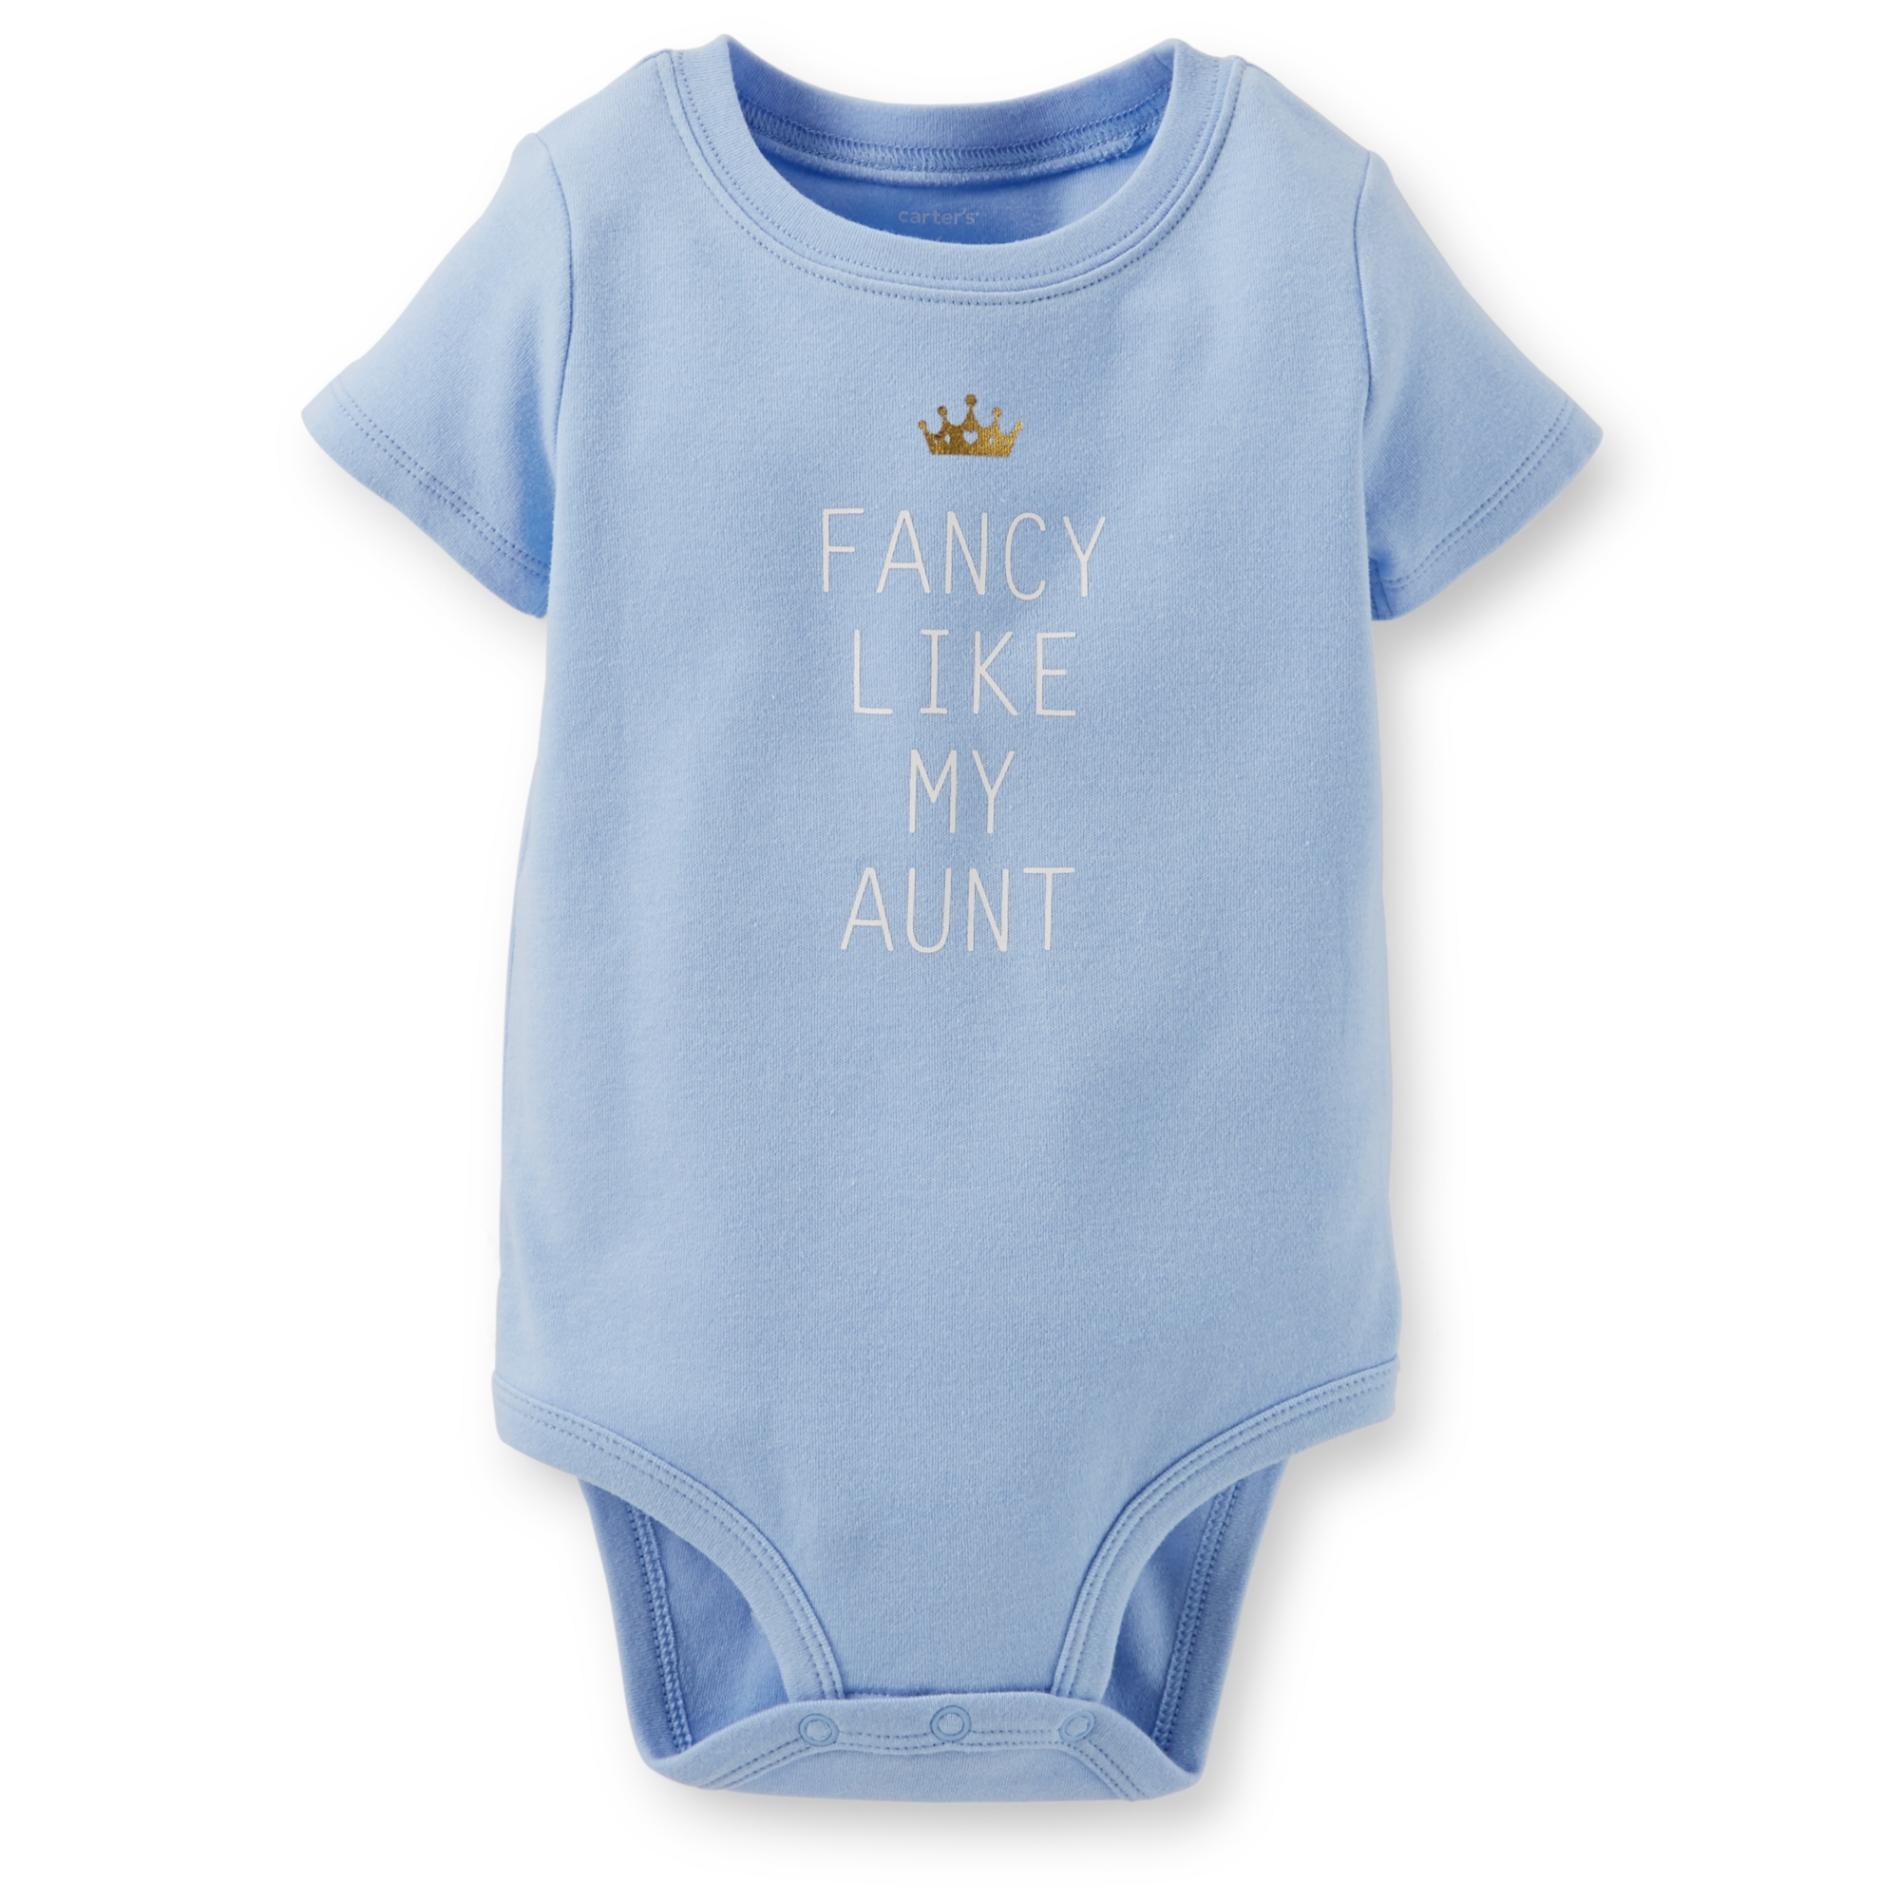 Carter's Newborn & Infant Girl's Short-Sleeve Bodysuit - Fancy Like My Aunt